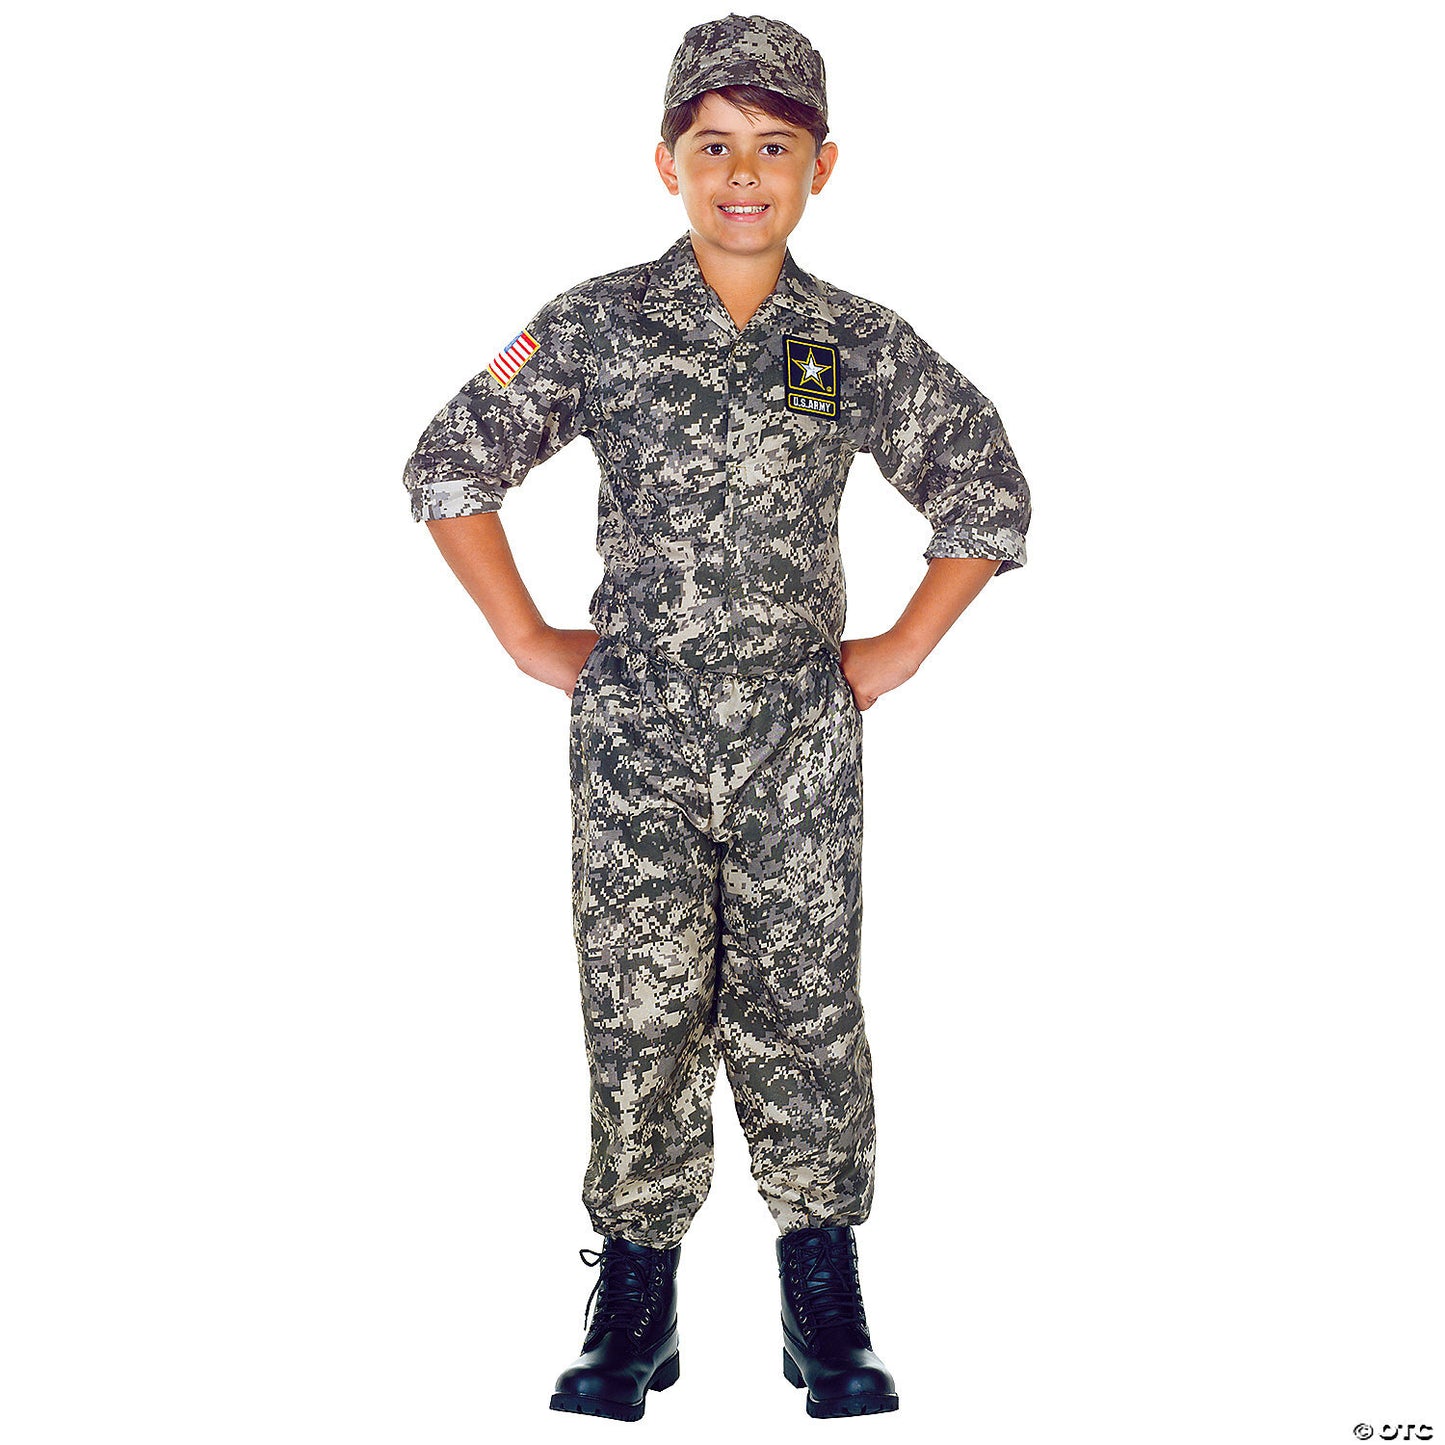 Unisex us army uniform costume